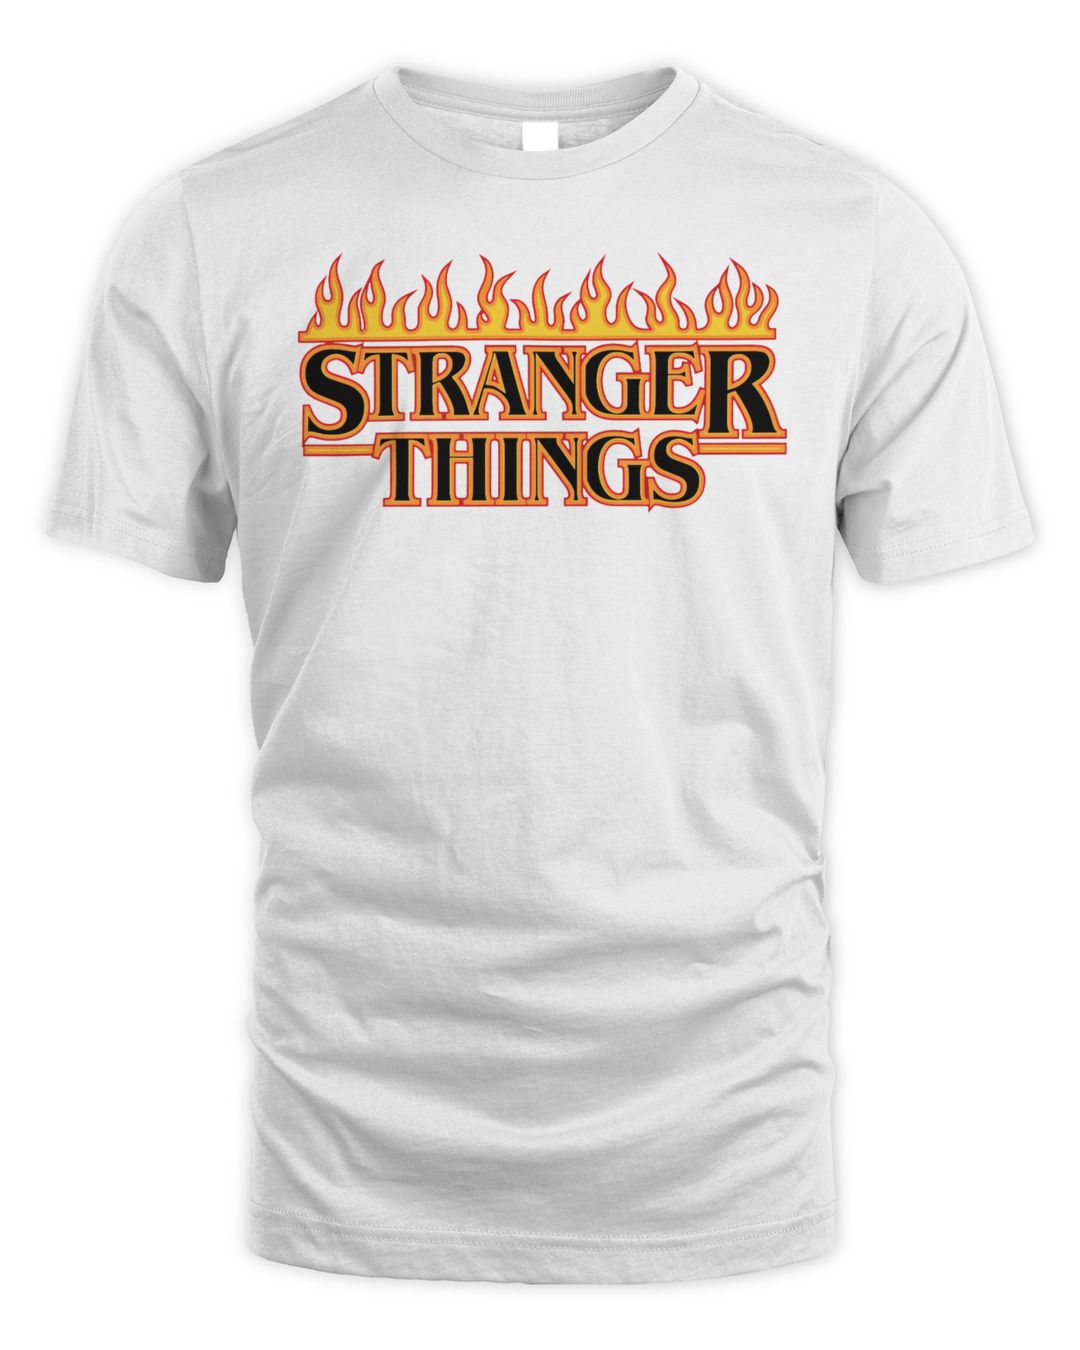 Stranger Things Merch Swappable Logo Shirt